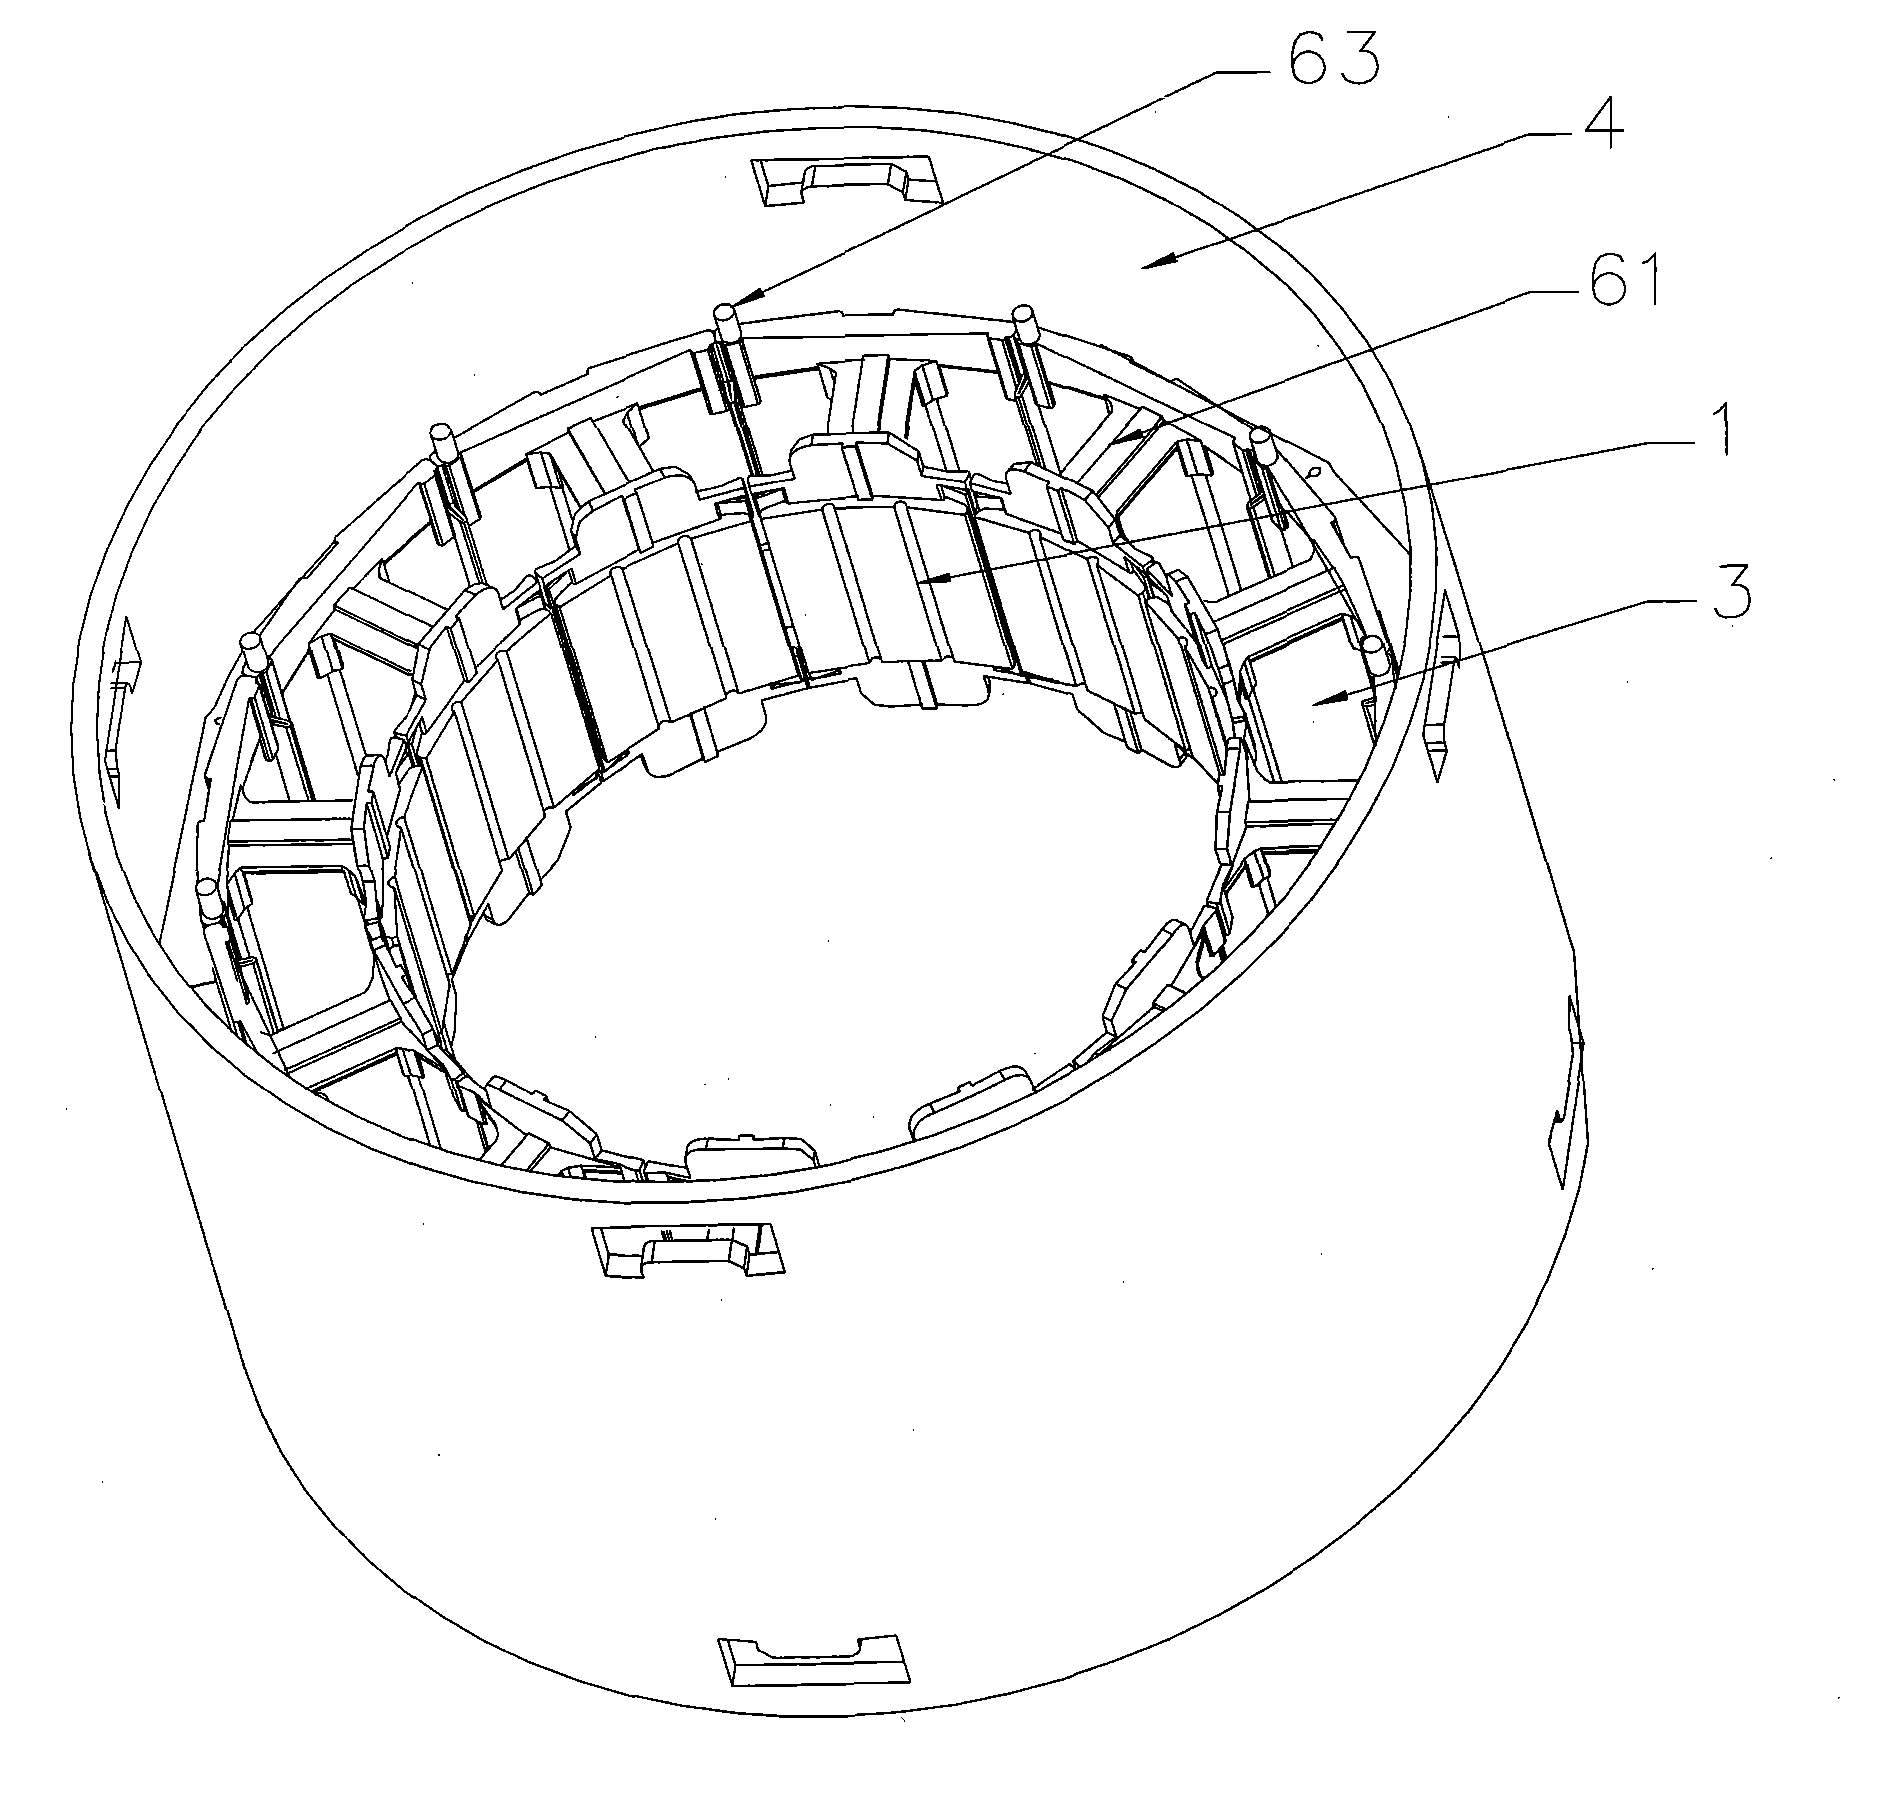 Drum motor stator structure